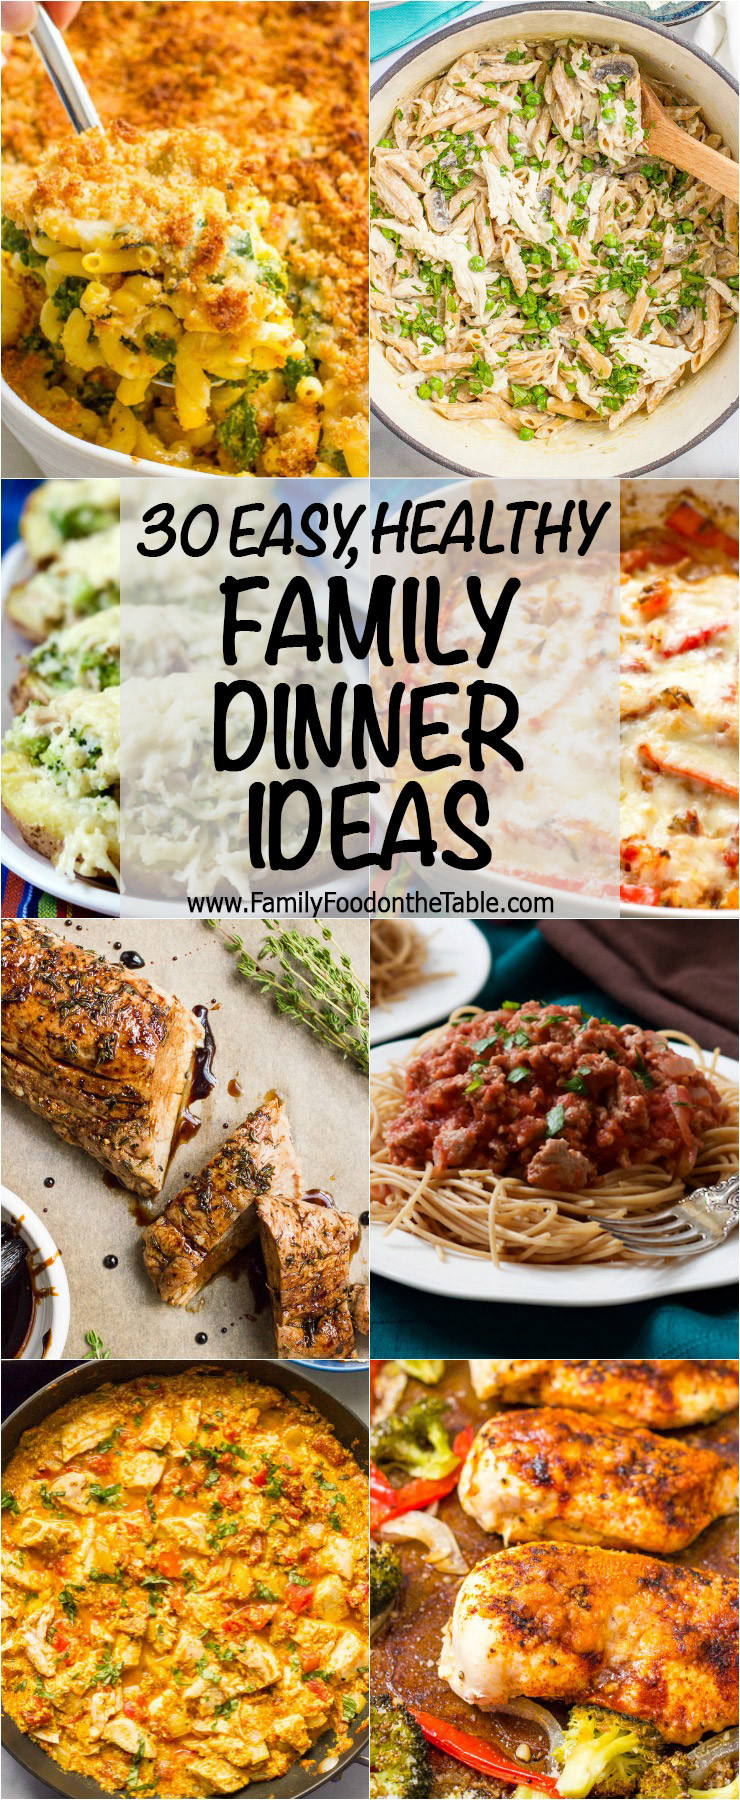 Dinner Ideas For The Family
 30 easy healthy family dinner ideas Family Food on the Table